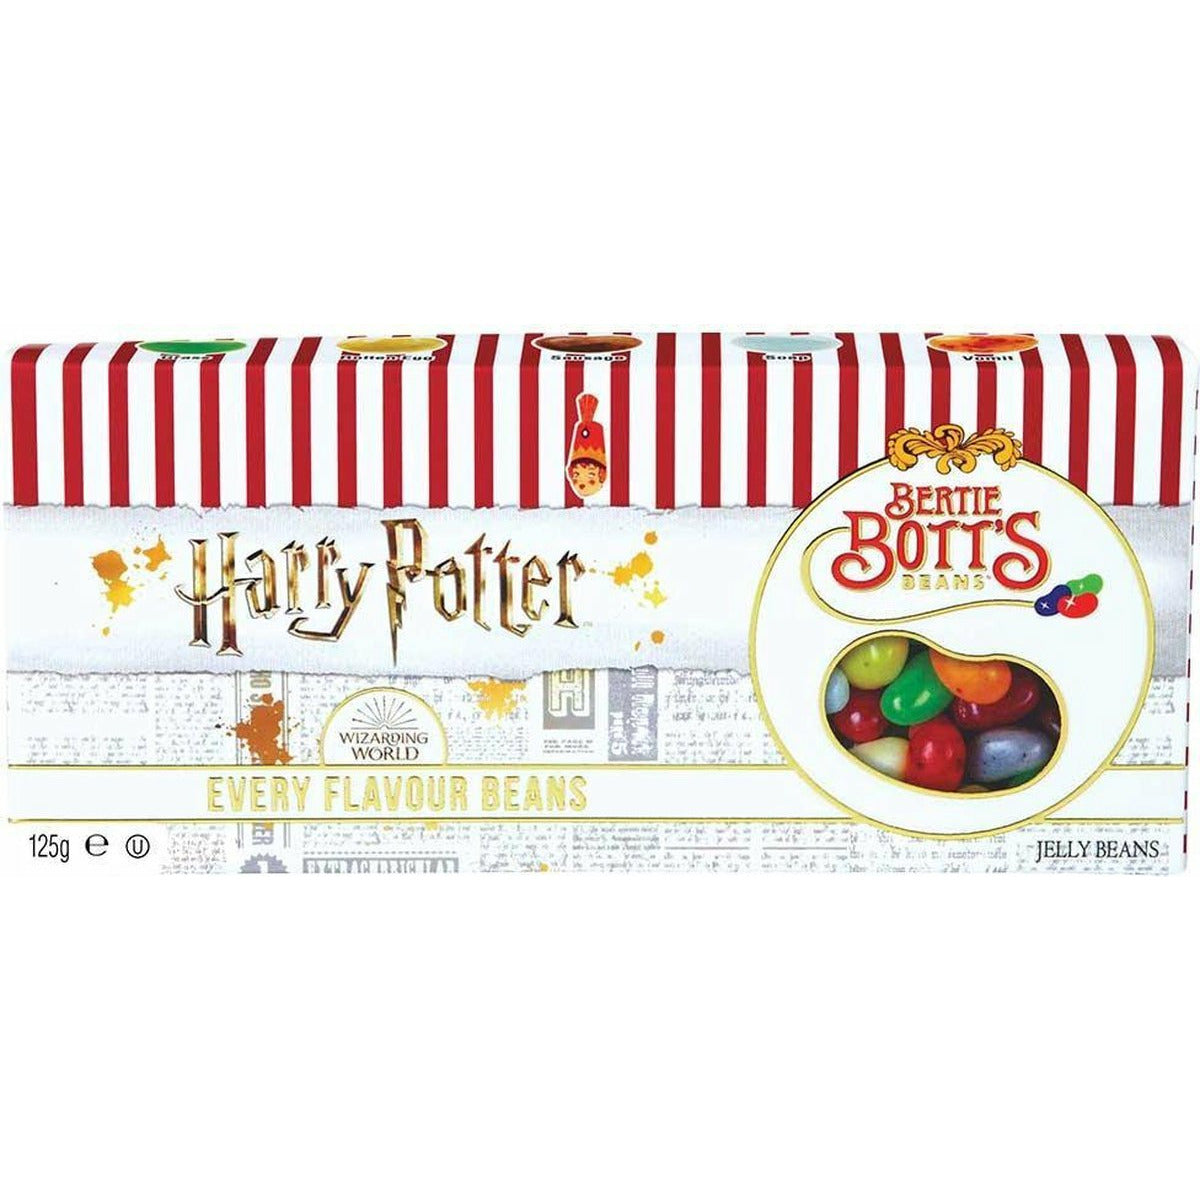 Jelly Belly Beans Harry Potter Bertie Bott's Gift Box - My American Shop